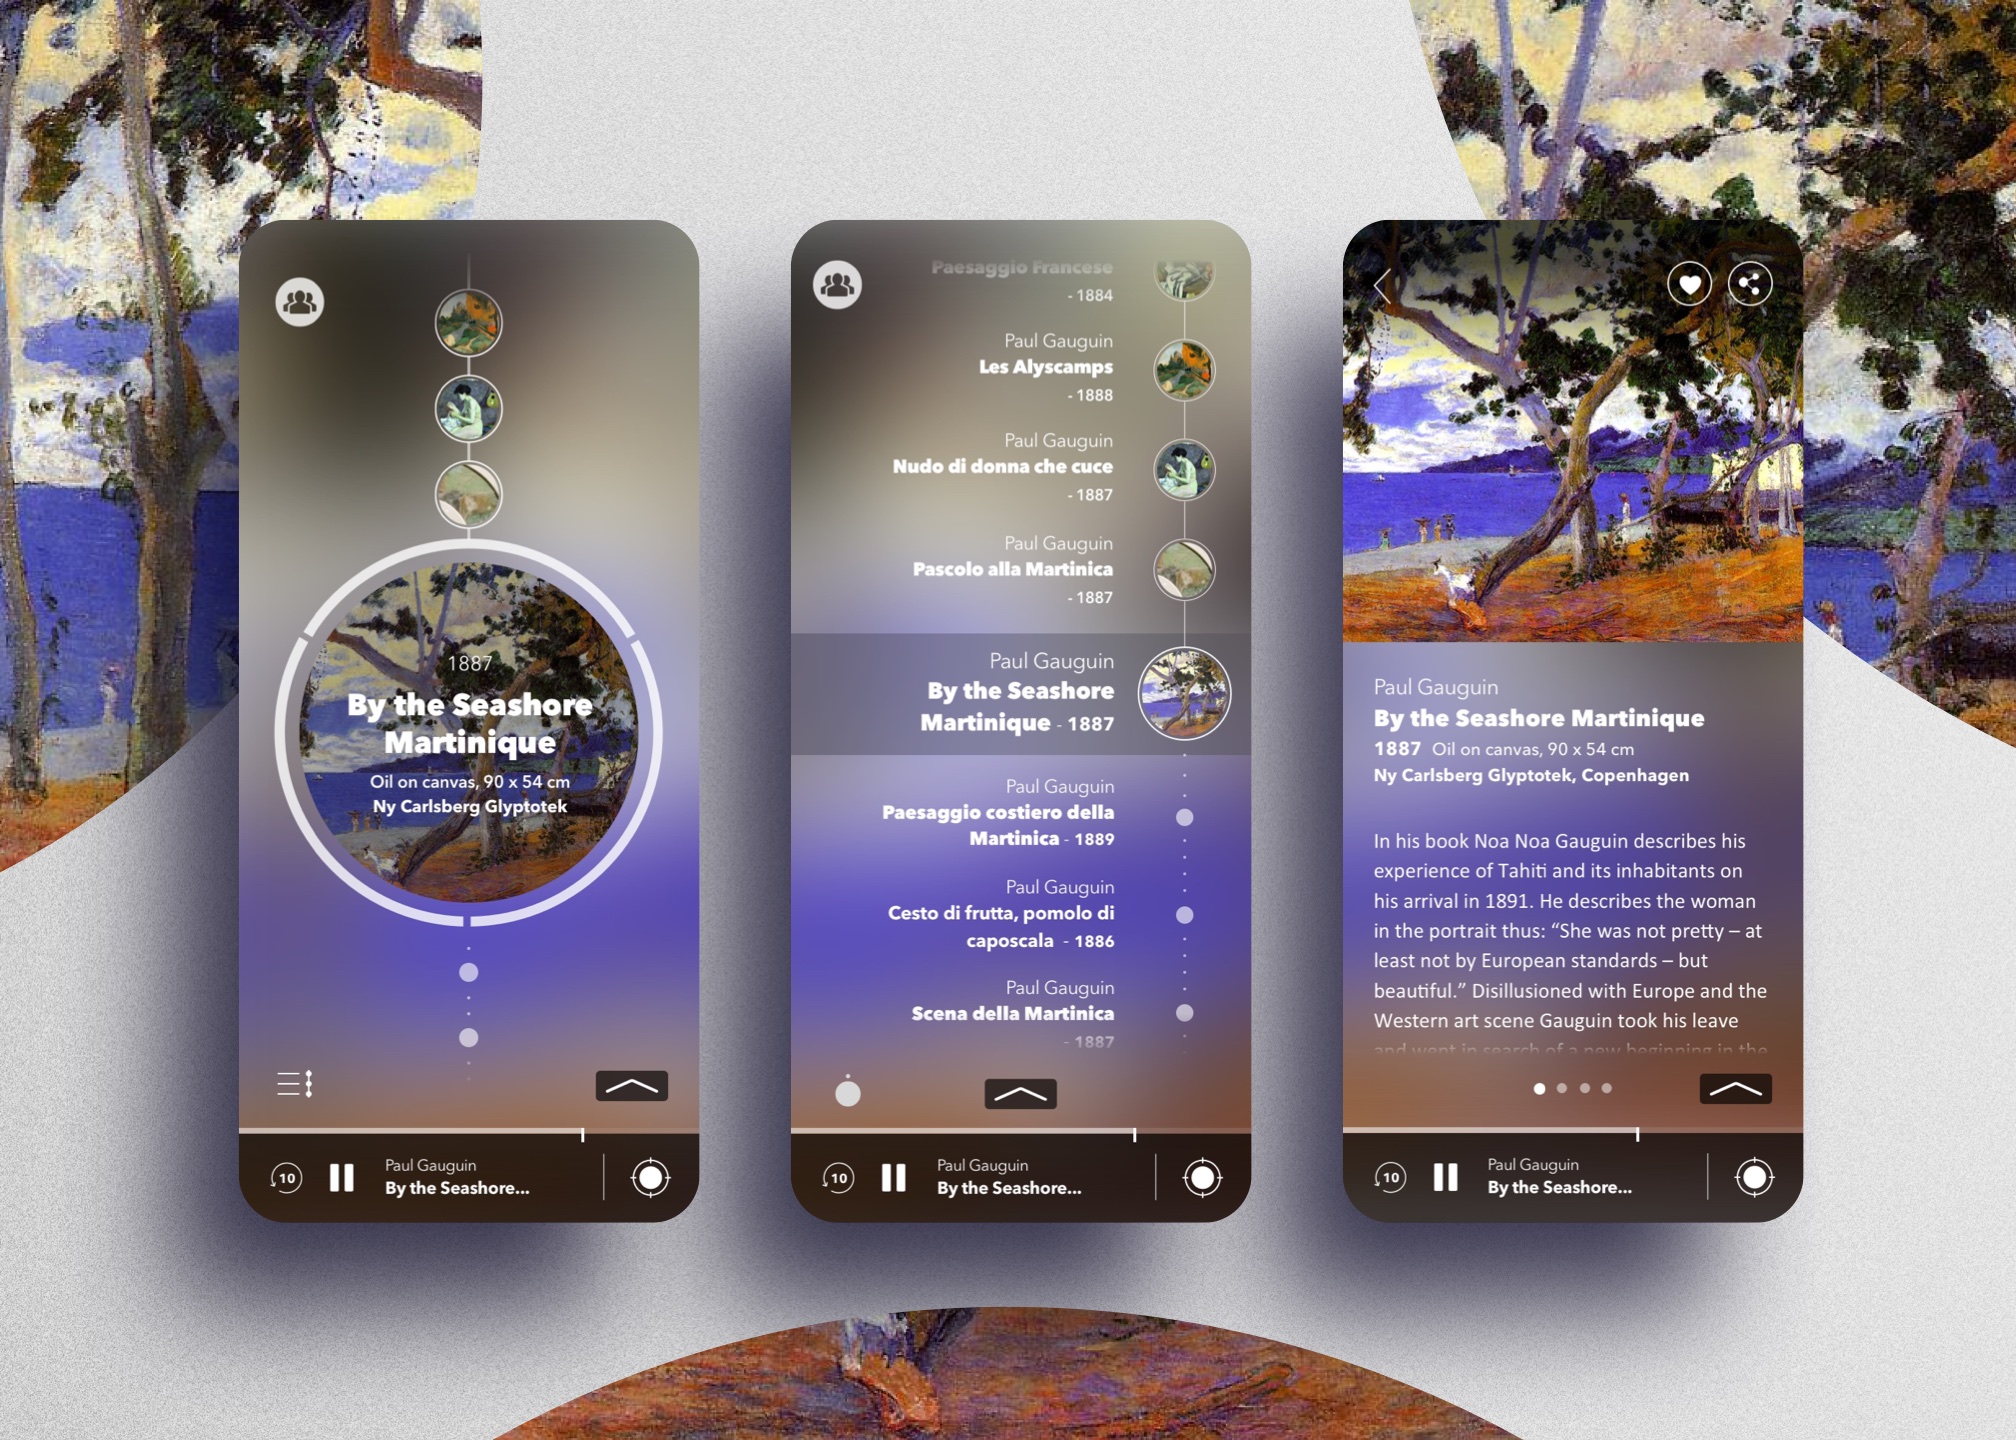 Enjoymuseum App exploration screens 2 - Fabio Besti Interdisciplinary Design